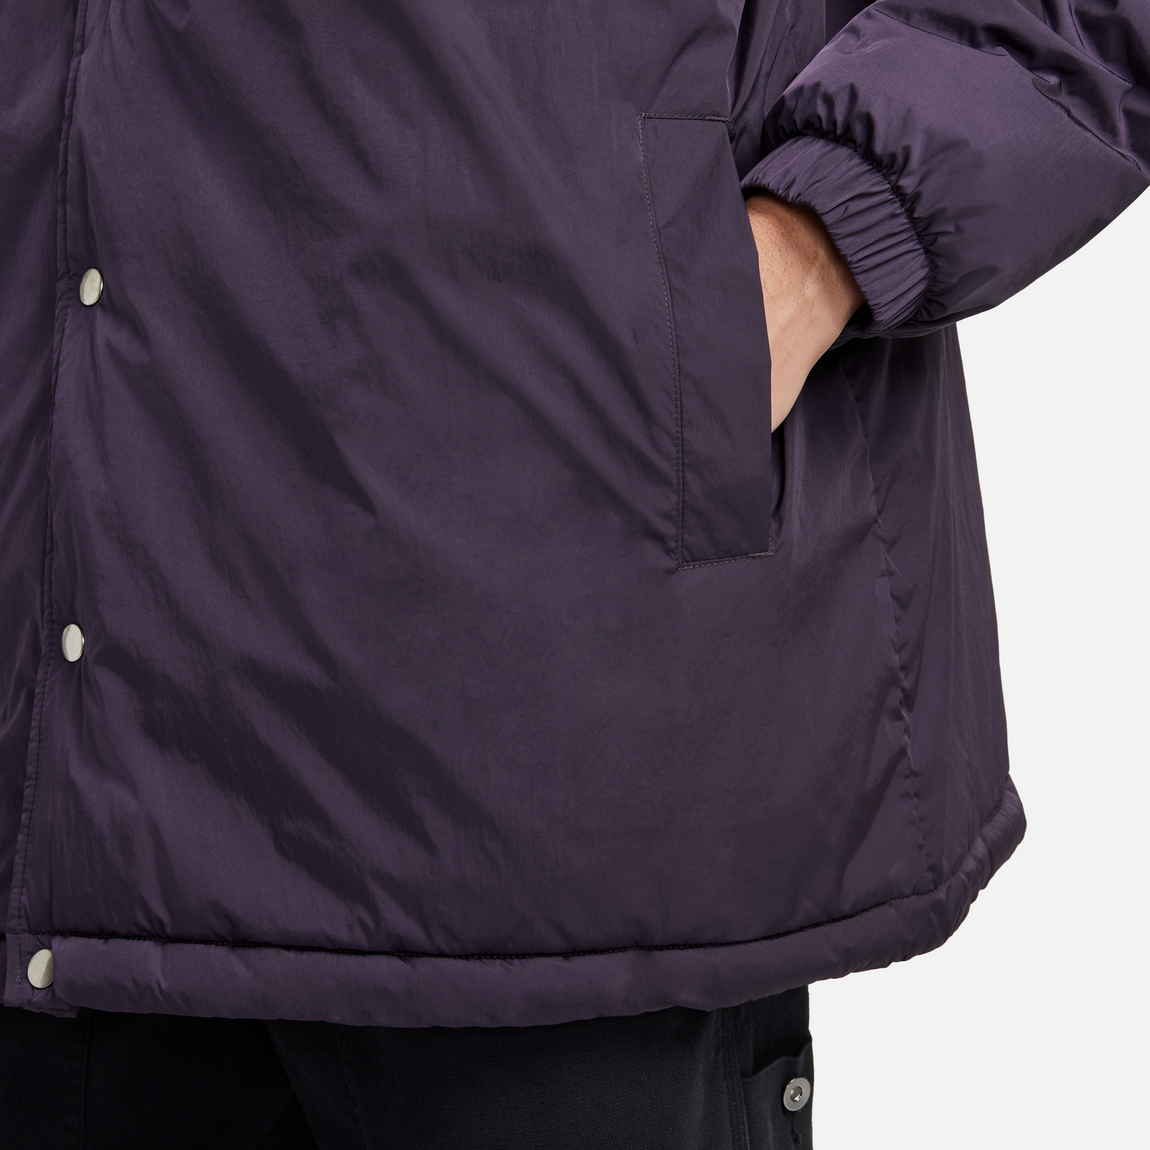 Nike Sportswear Therma-Fit Authentics Jacket (Cave Purple)